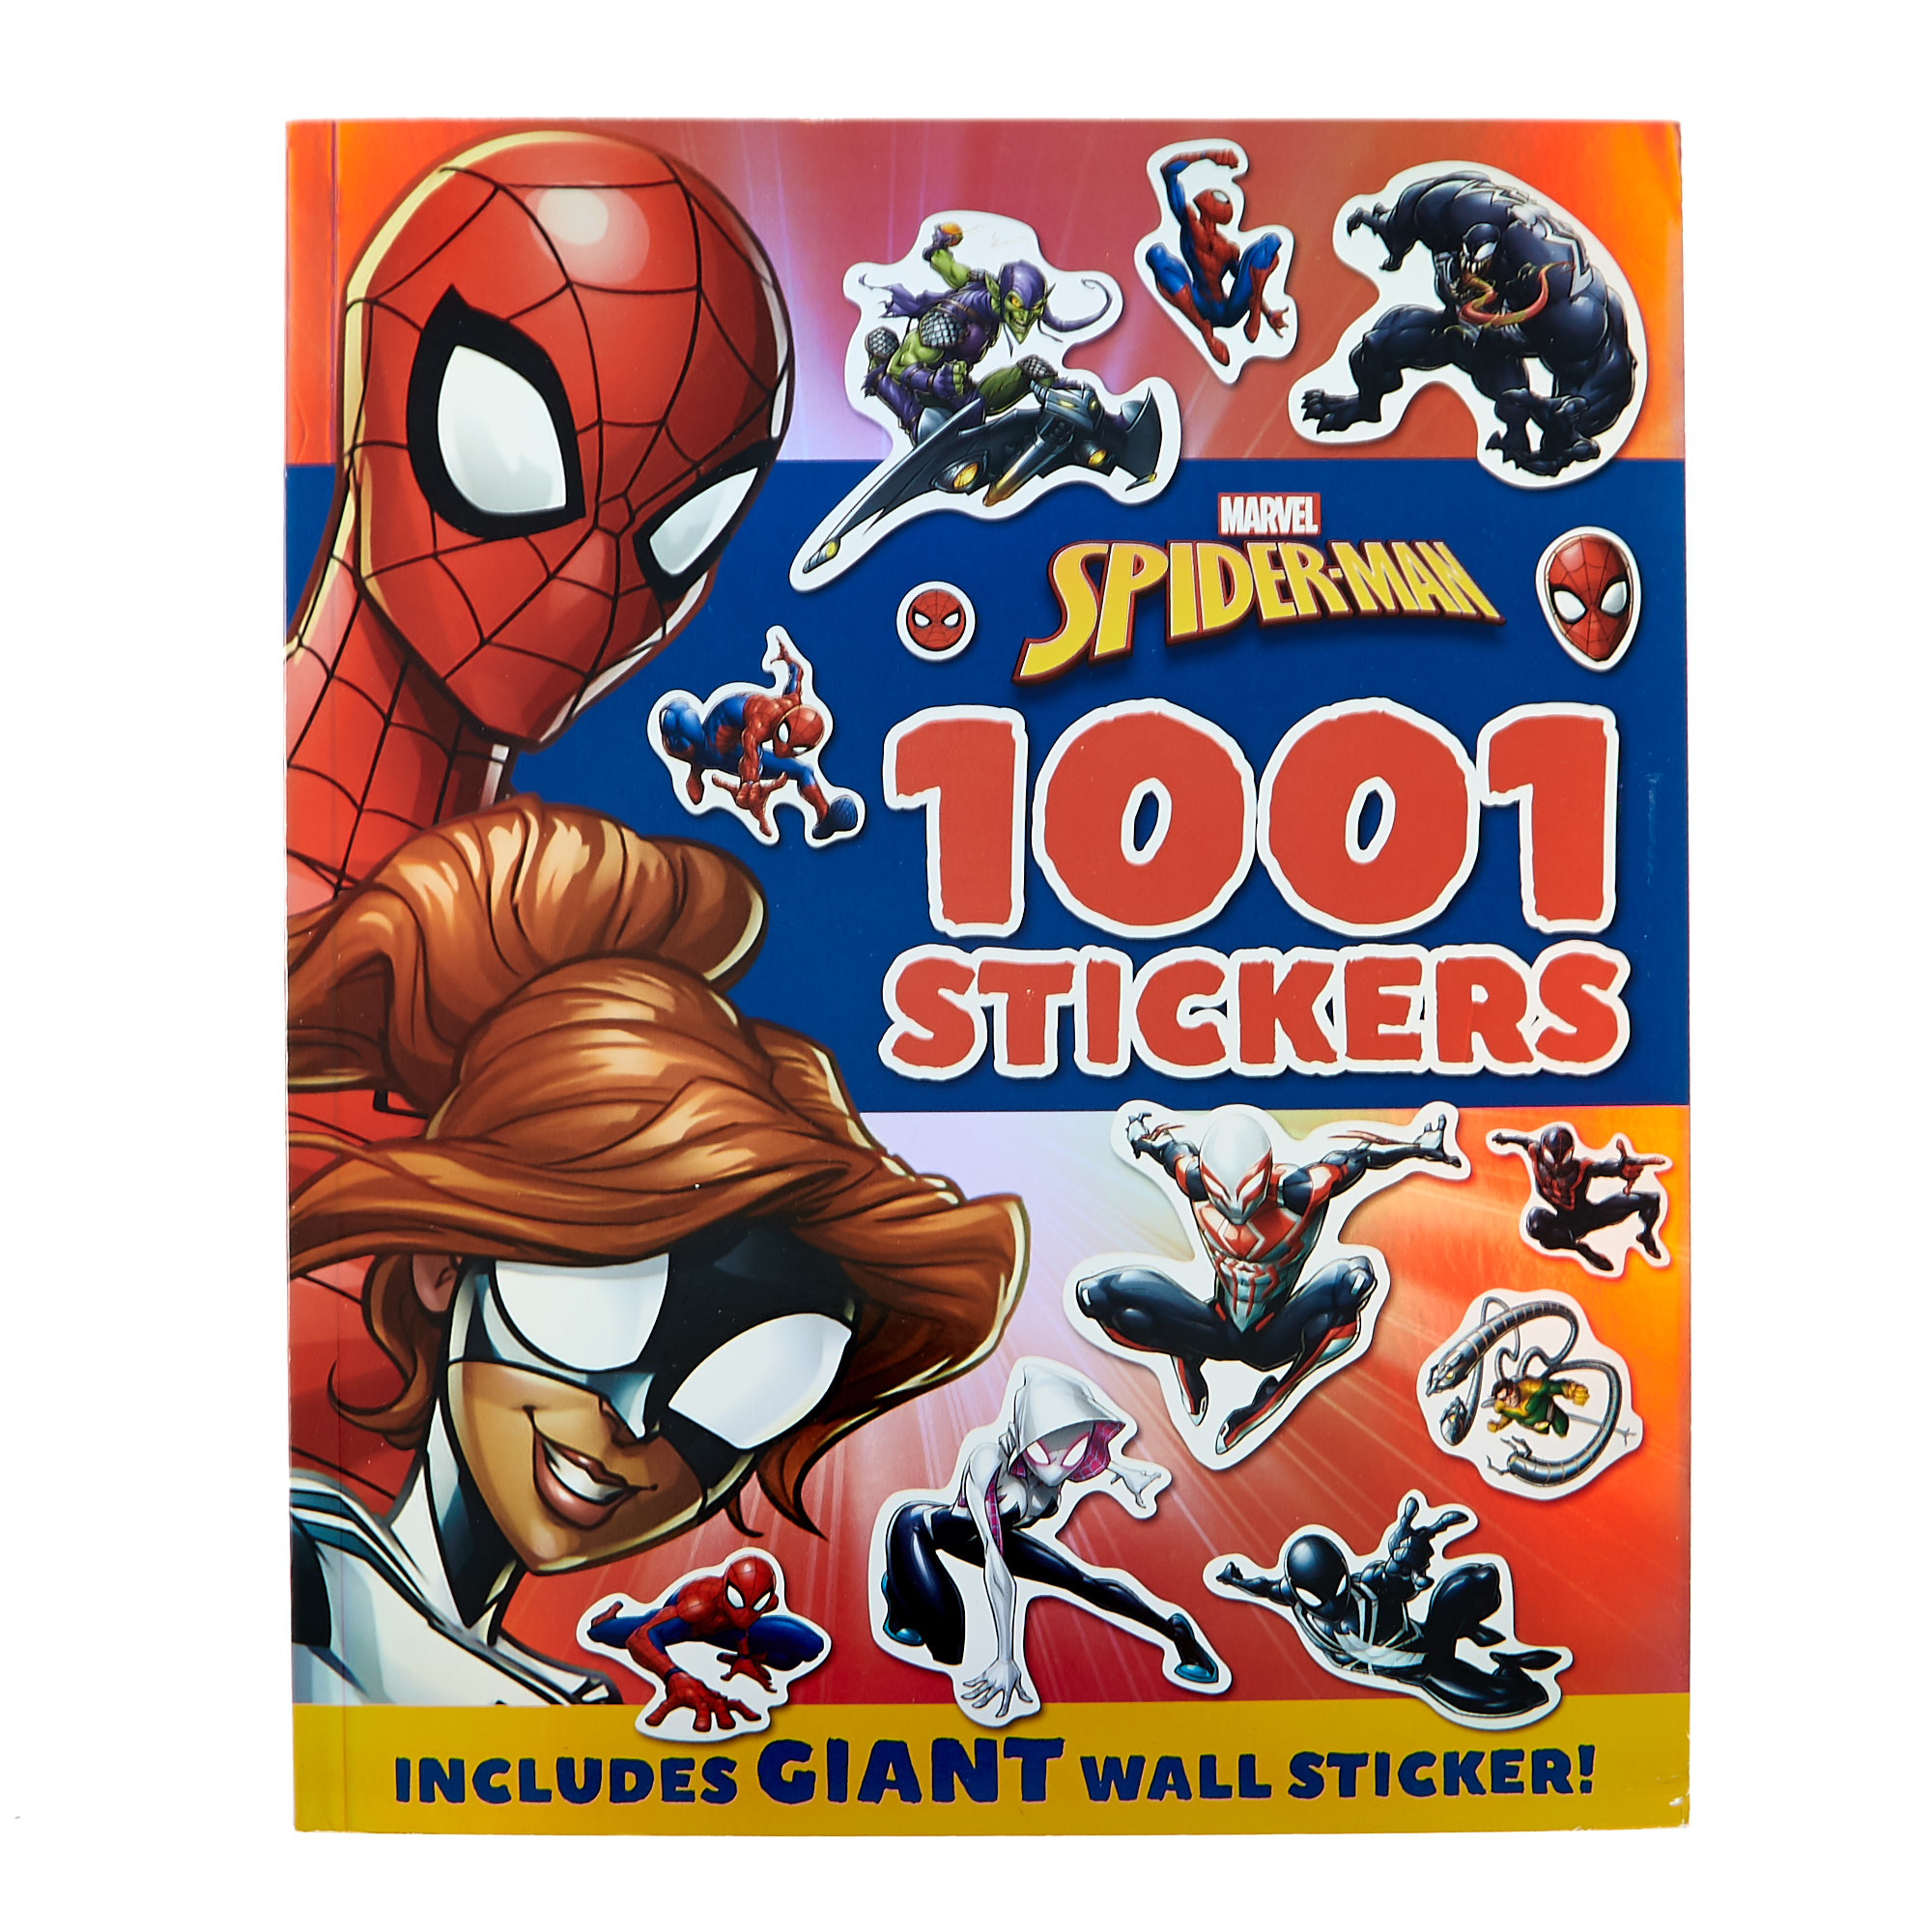 Disney's Onward, Incredibles 2 & Spider-Man Sticker Books - Set Of 3